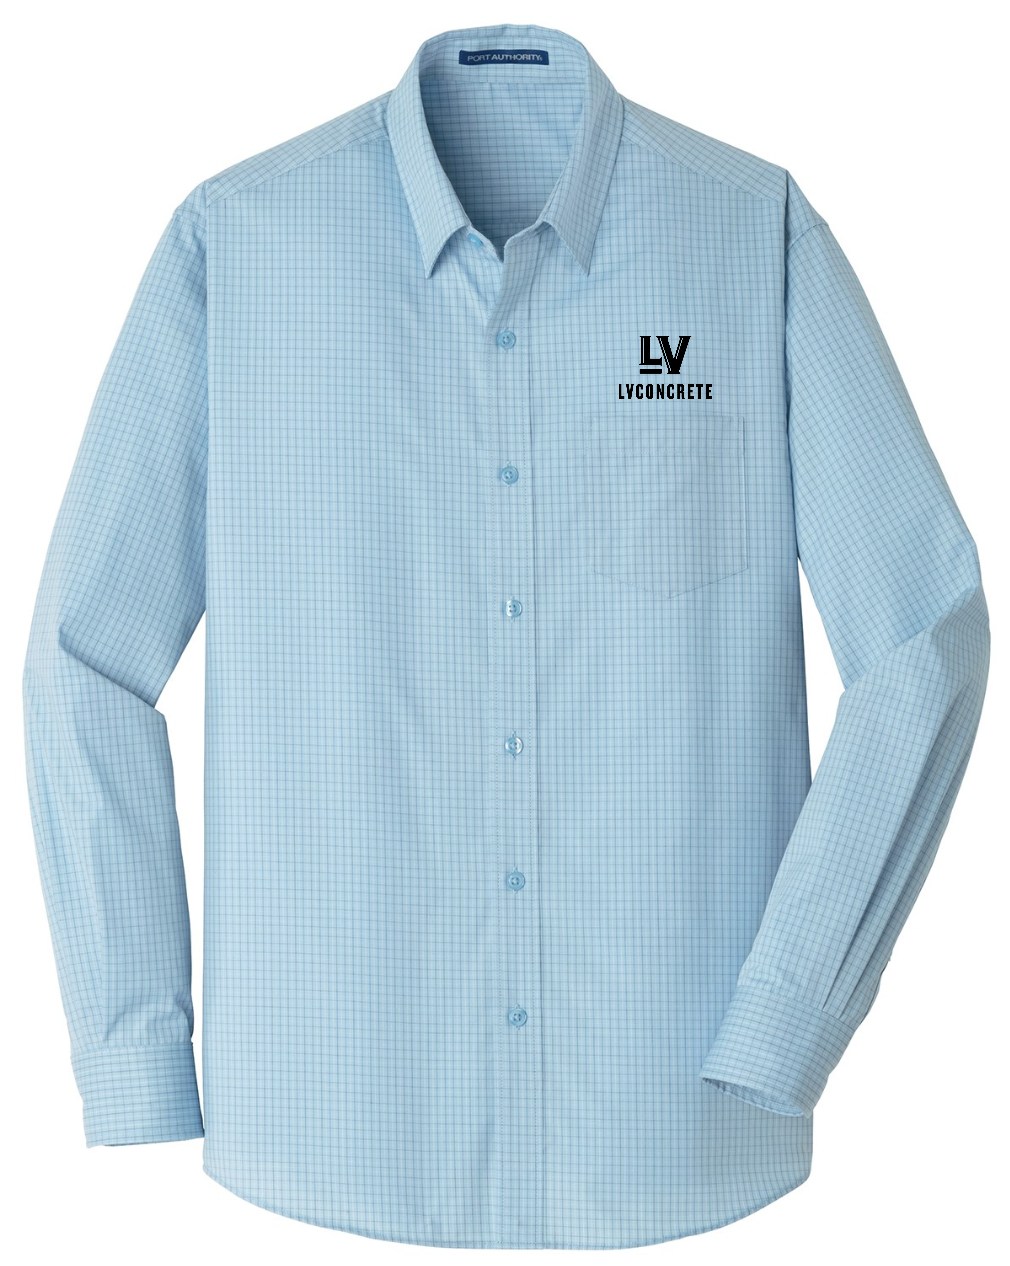 LV Concrete Standard Tattersall Dress Shirt